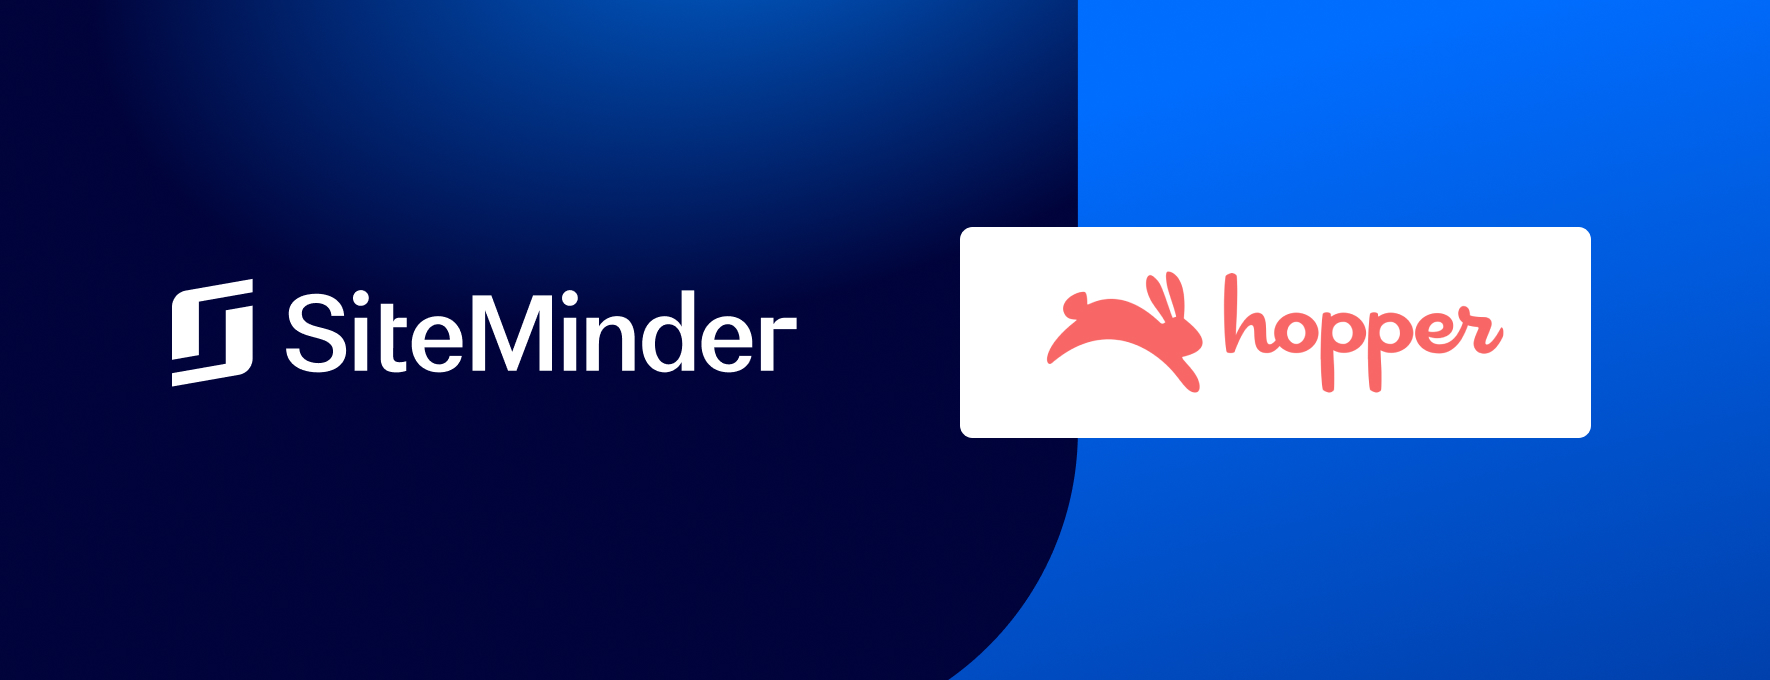 Siteminder-Hopper partnership